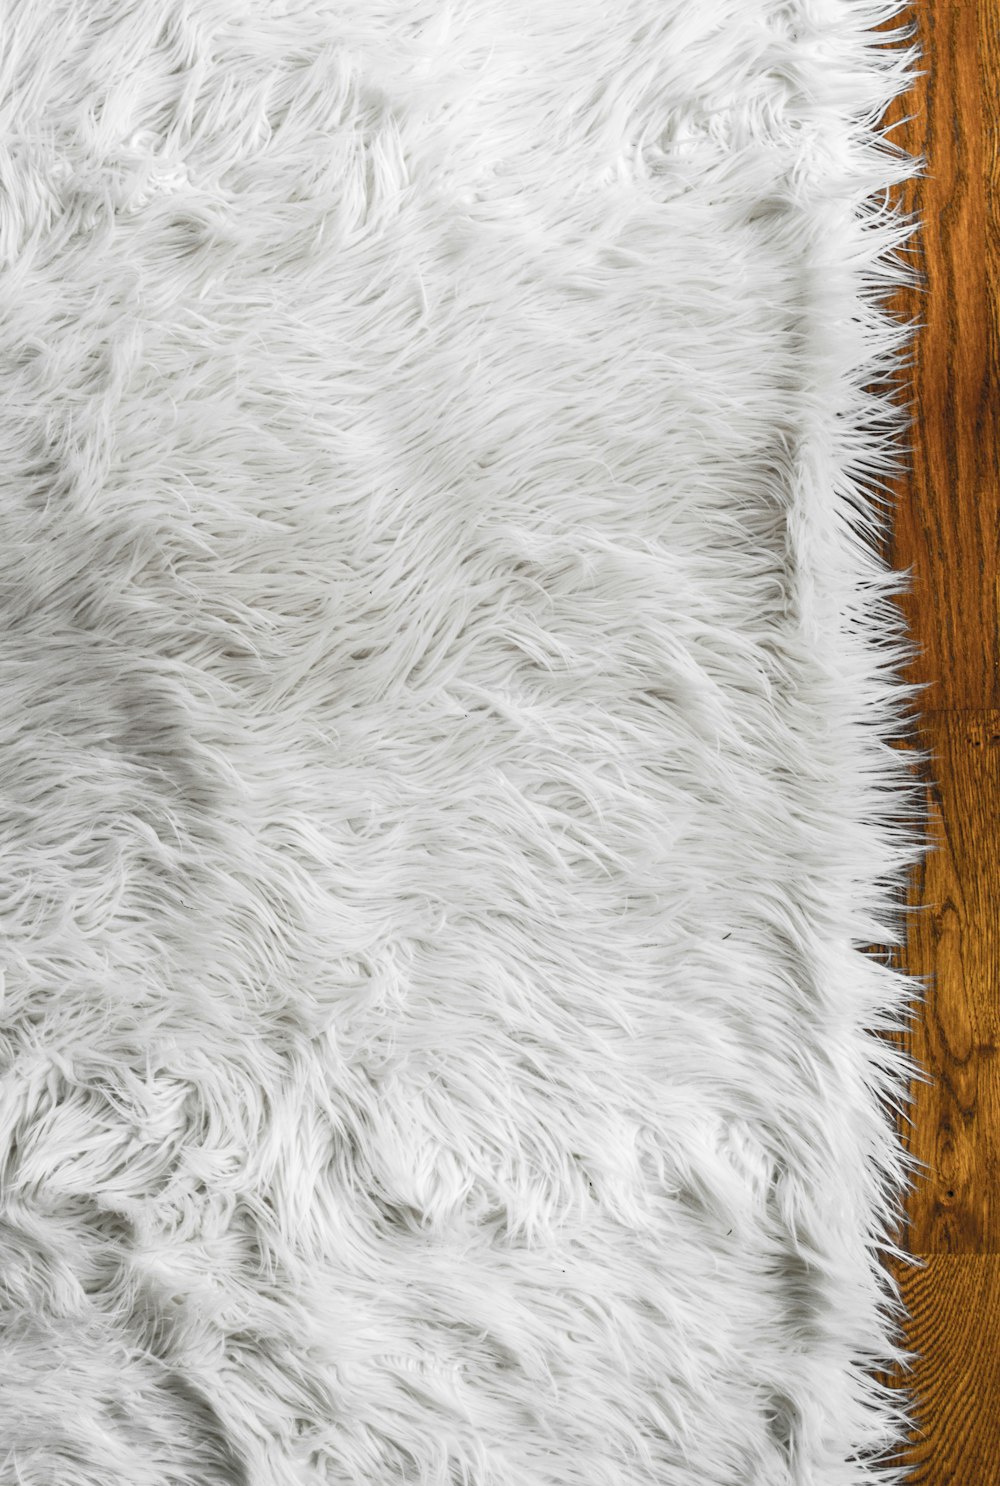 tappeto in pelle di pecora bianca